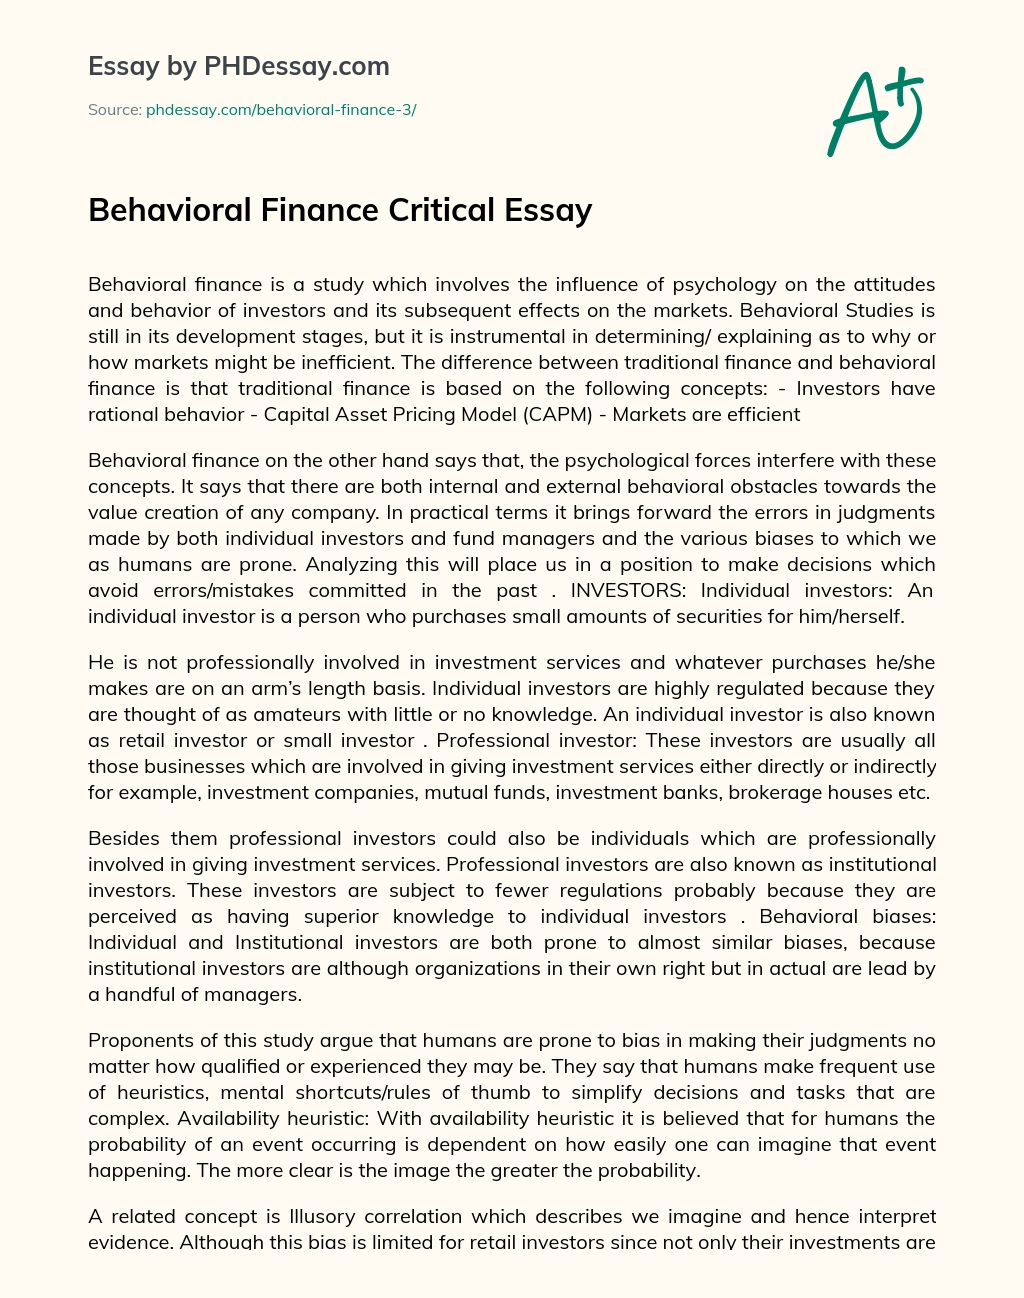 Behavioral Finance Critical Essay essay